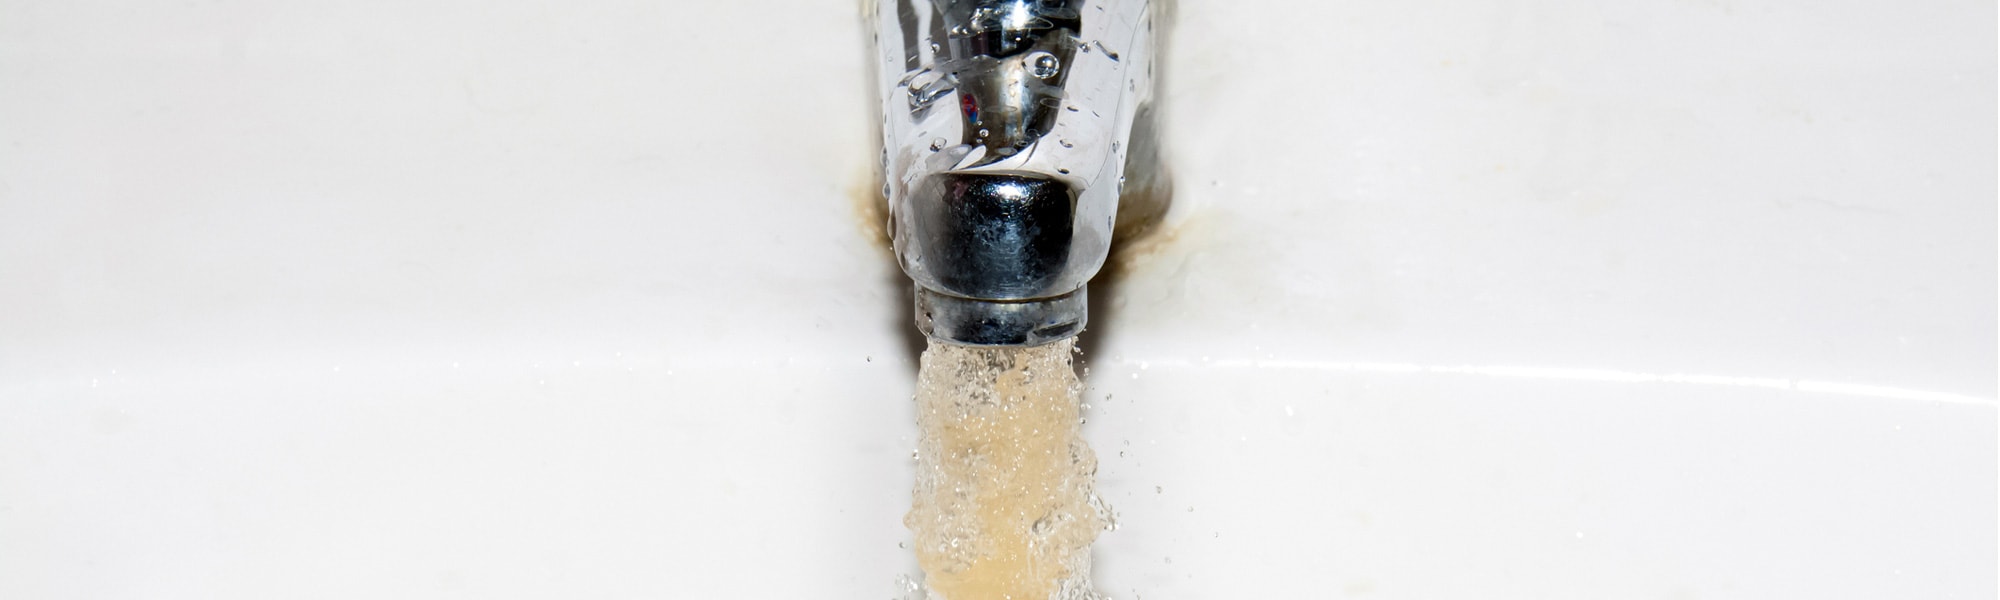 imagen de agua sucia saliendo de un grifo del fregadero